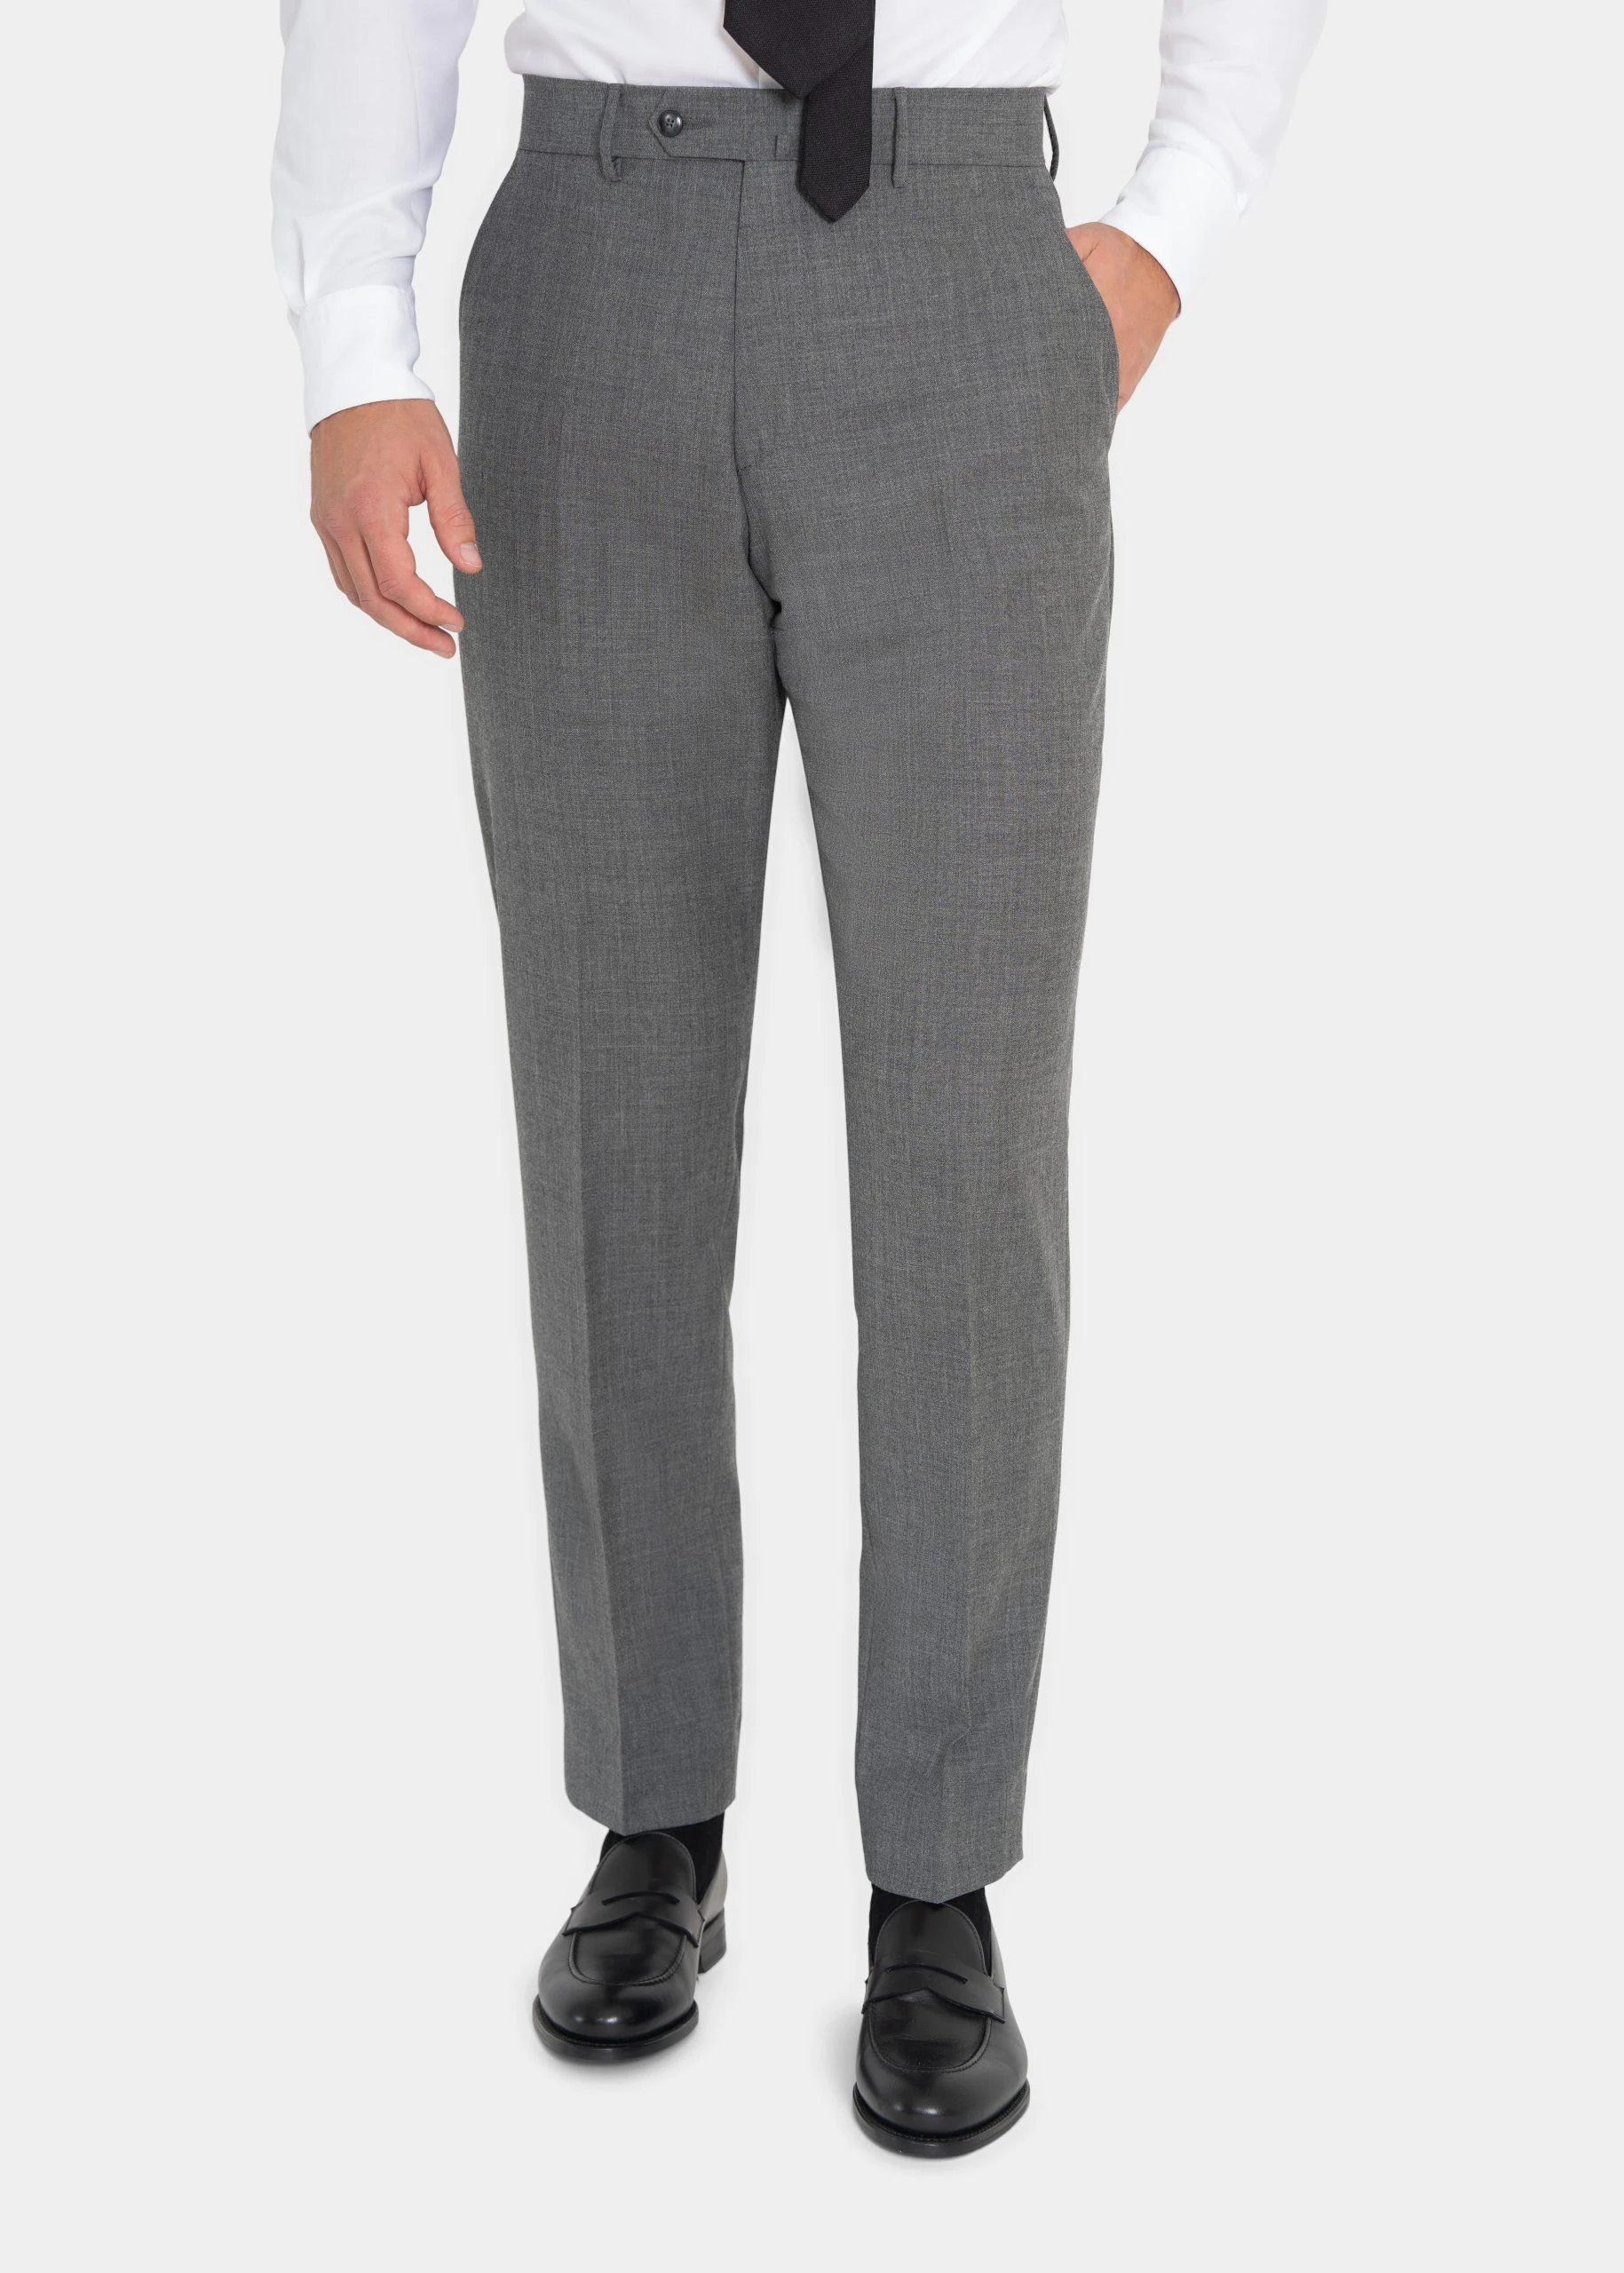 medium grey suit trousers in twistair fabric